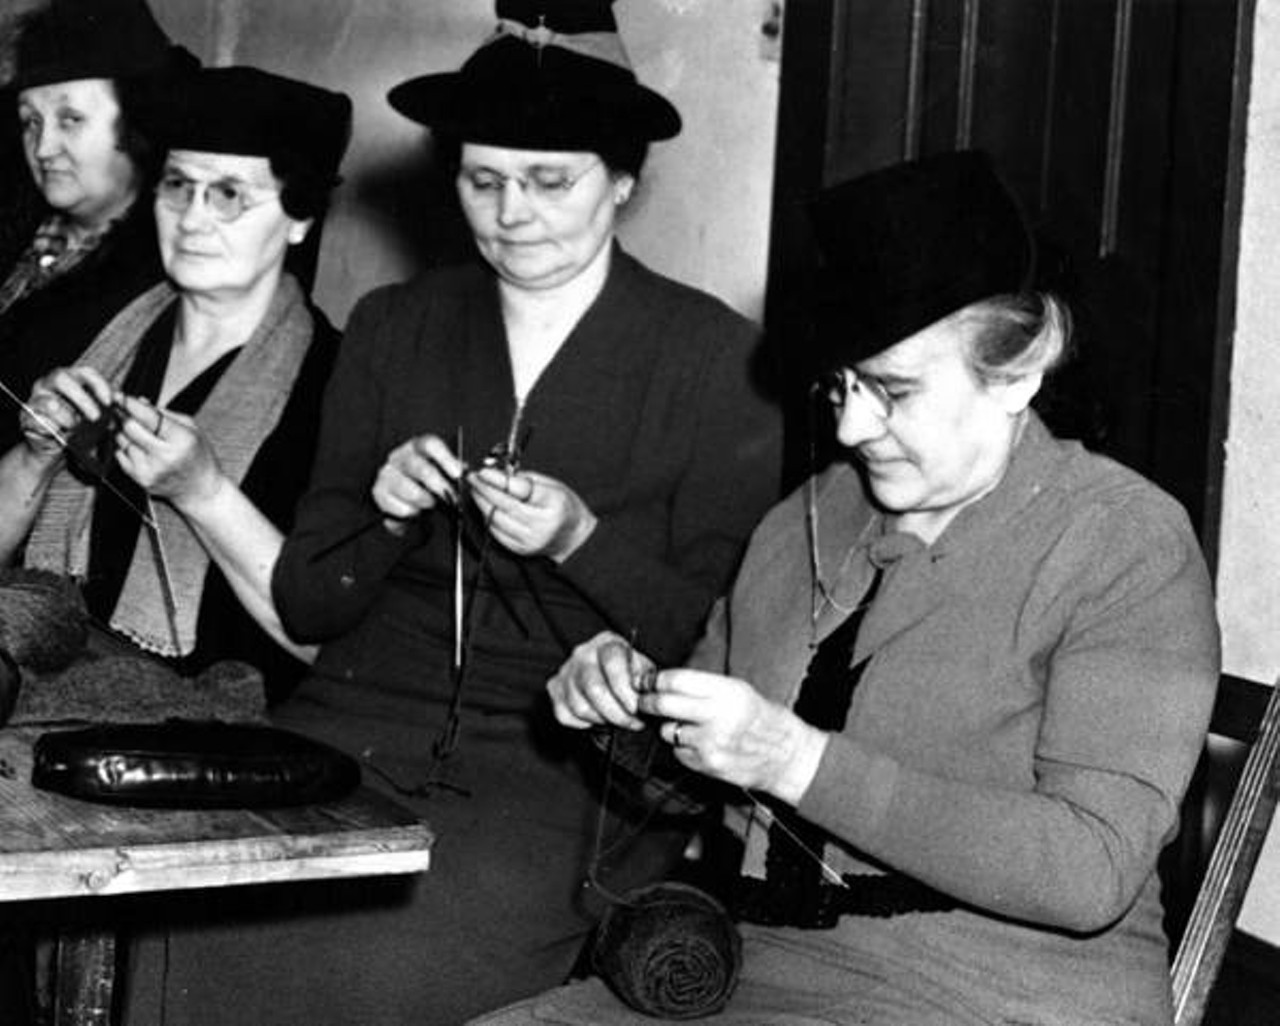  Women Knitting at St. Stanislaus Church, 1939
